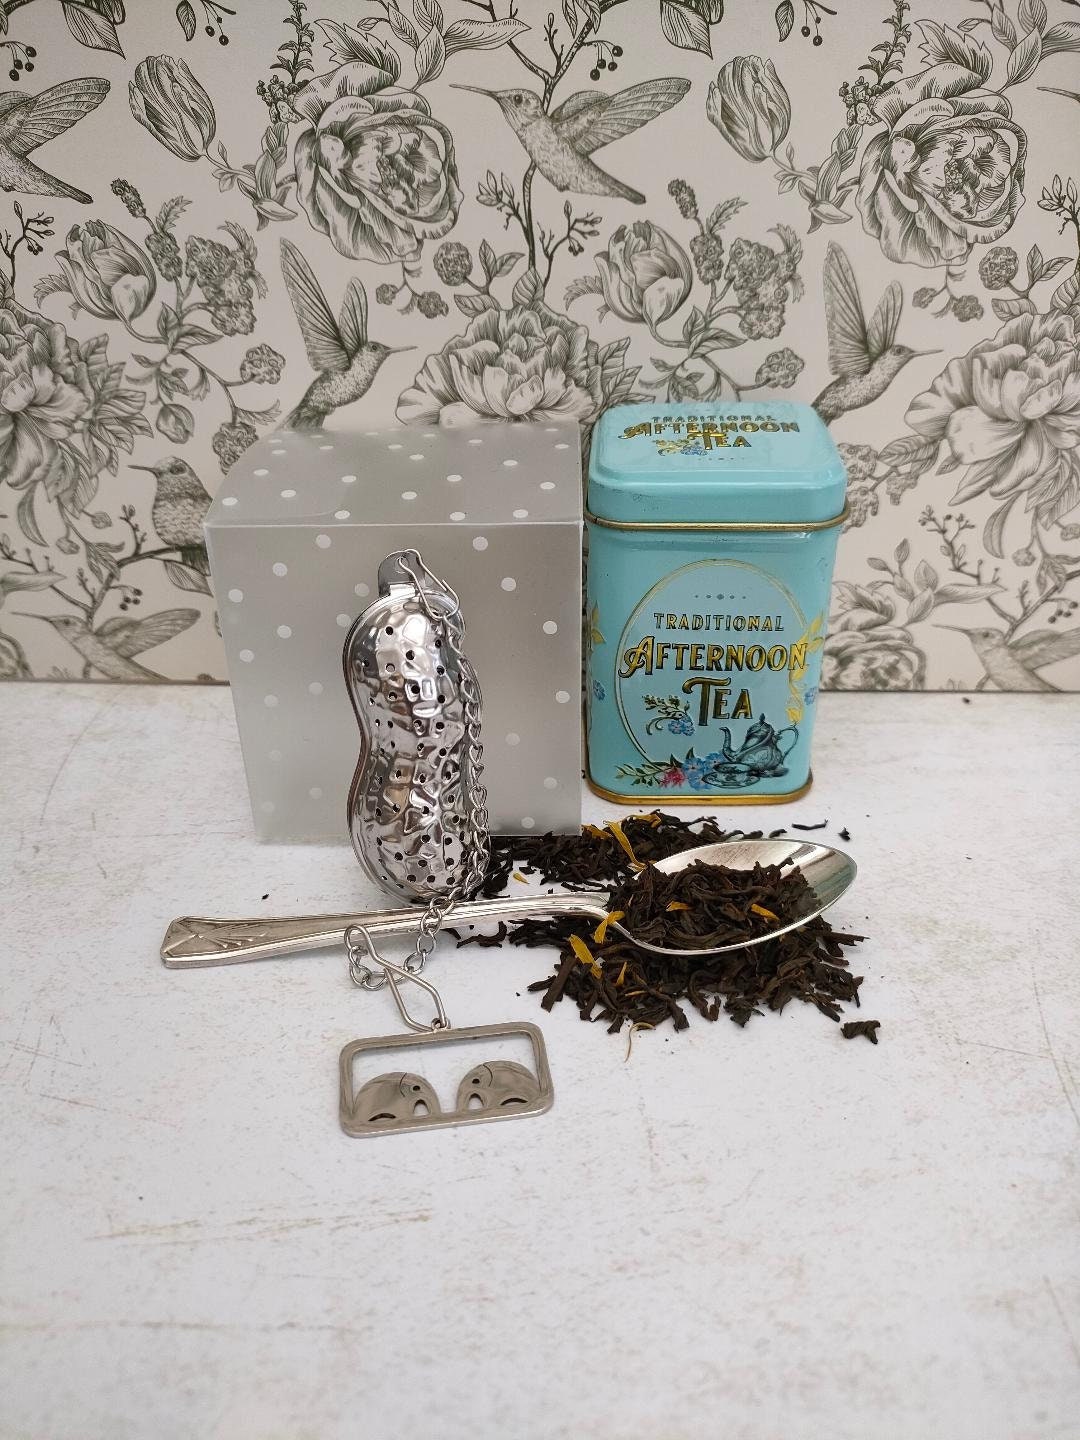 Peanut Shaped Tea Infuser with Elephant Charm, loose Tea Infuser, Mesh Tea Strainer, herb infuser, Animal Themed Tea Gifts